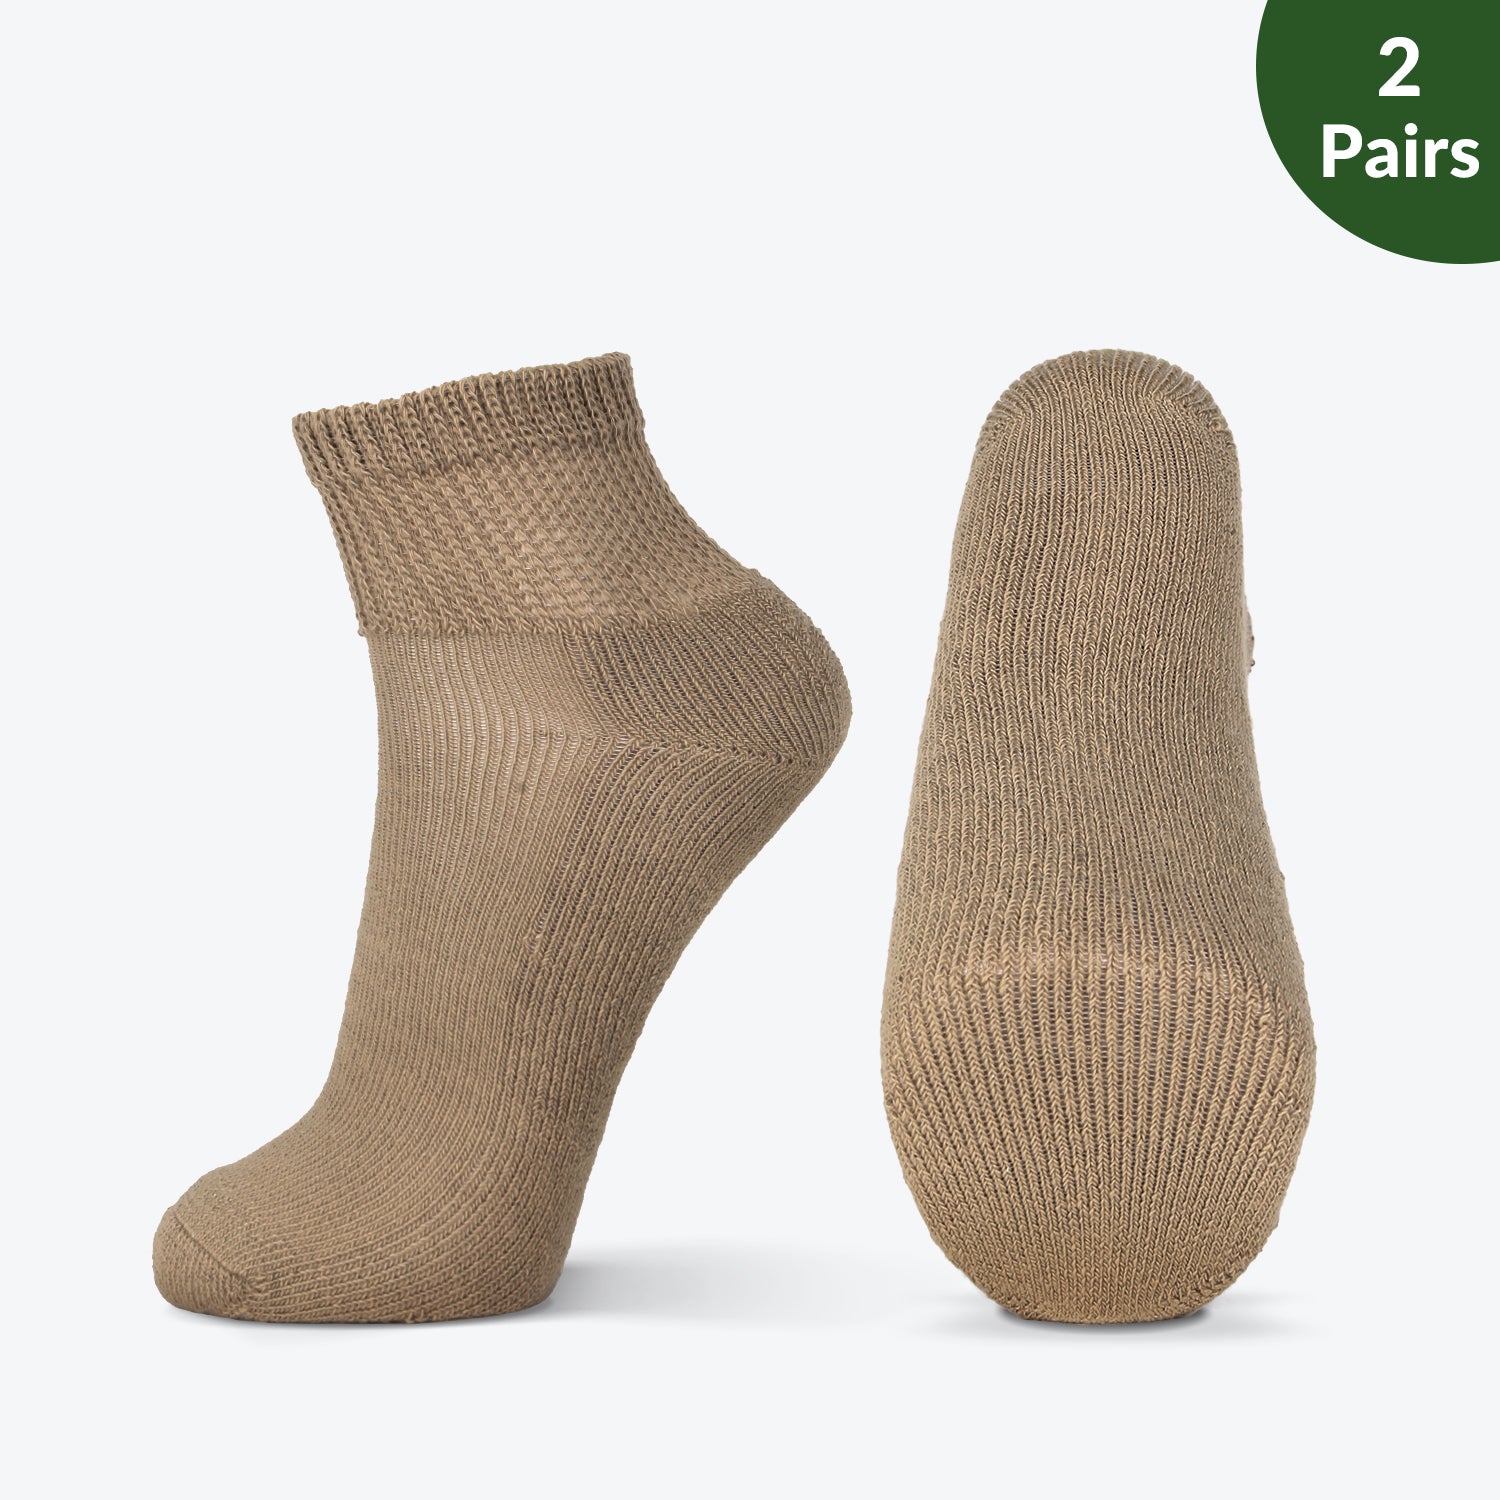 Ankle Socks Non Binding Top for Swollen Feet 2 Paris